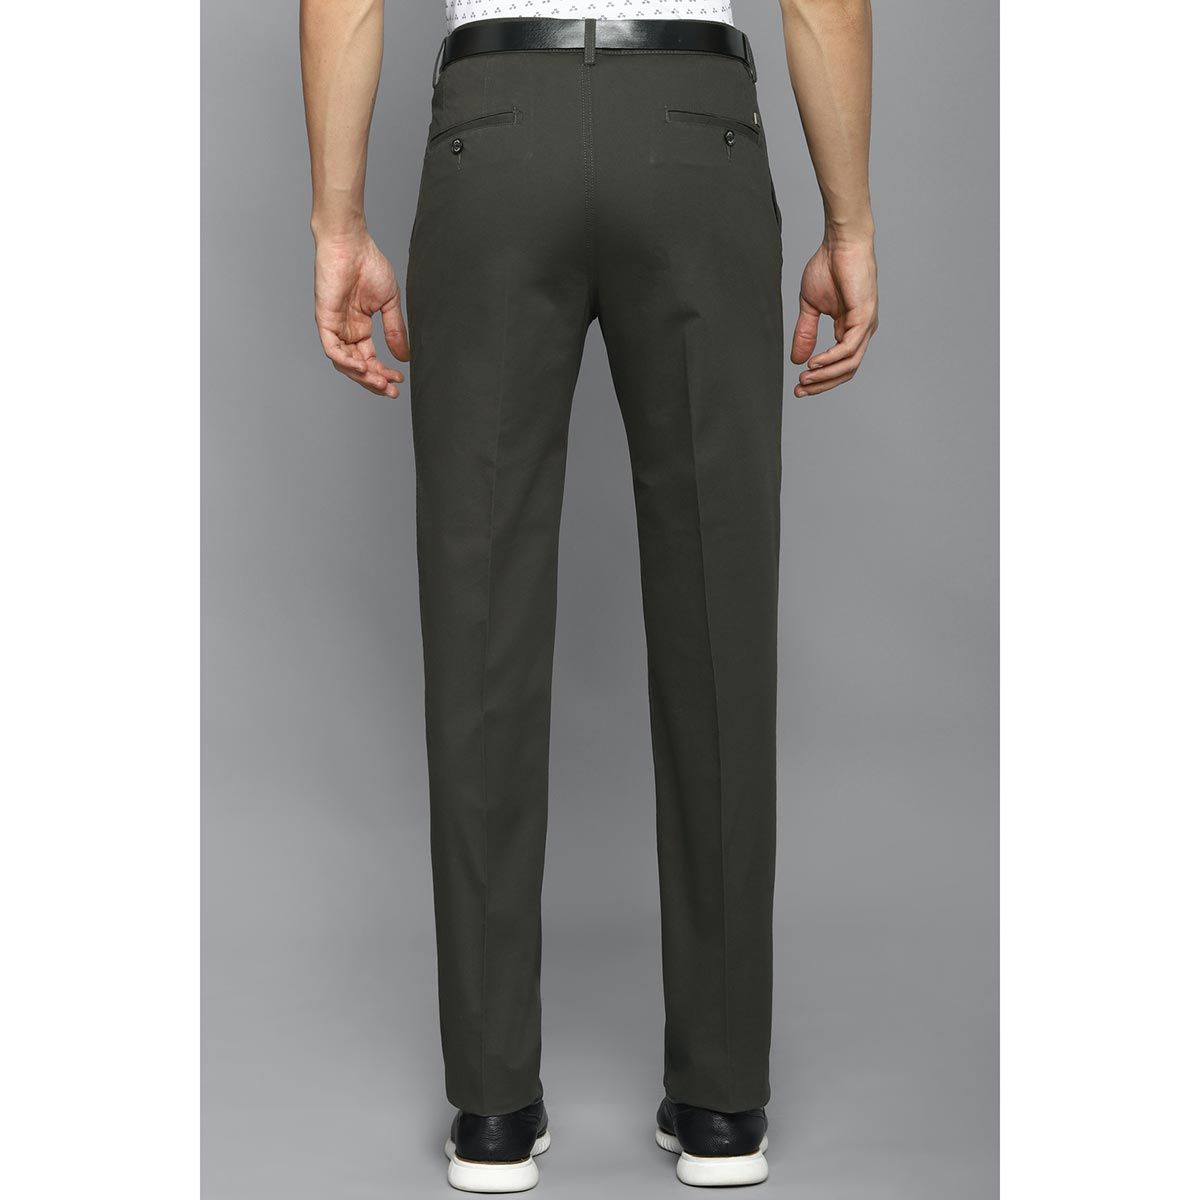 Allen Solly Formal Trouser for Men Online at Best Price on Paytm Mall